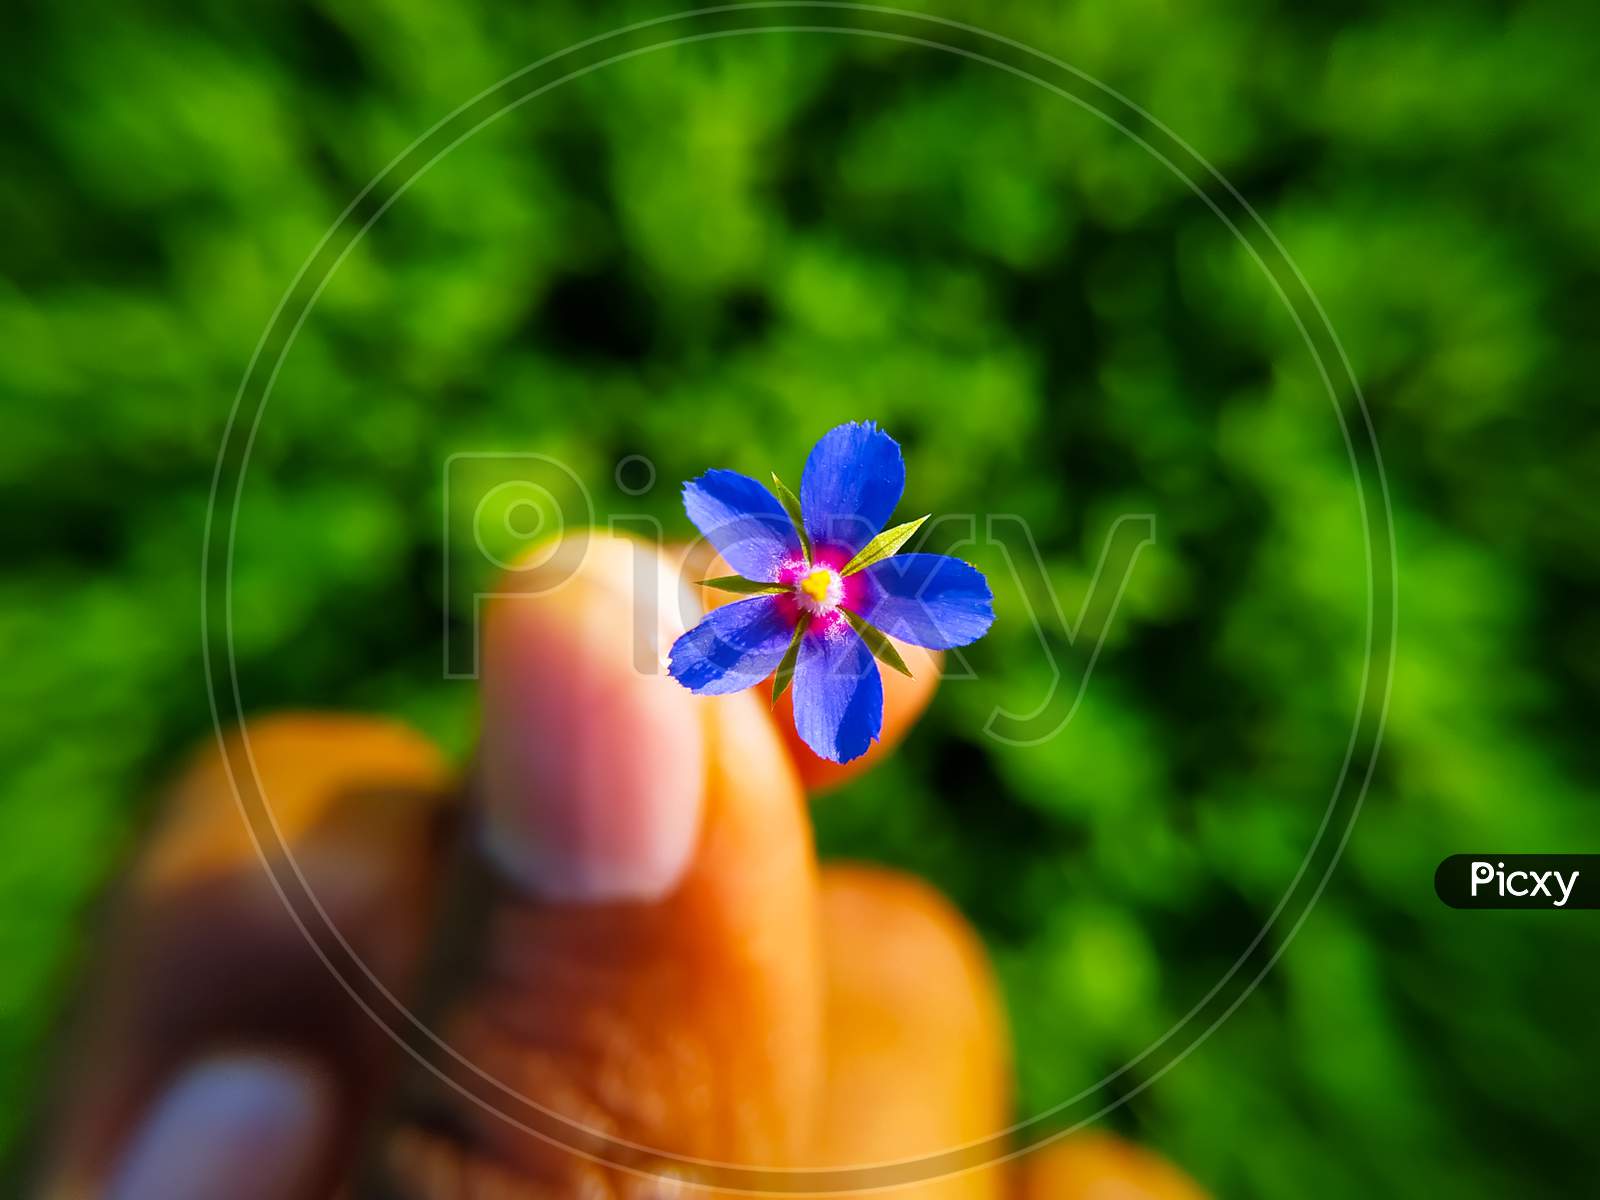 Lysimachia Foemina Flower In Hand On Green Blurred Background